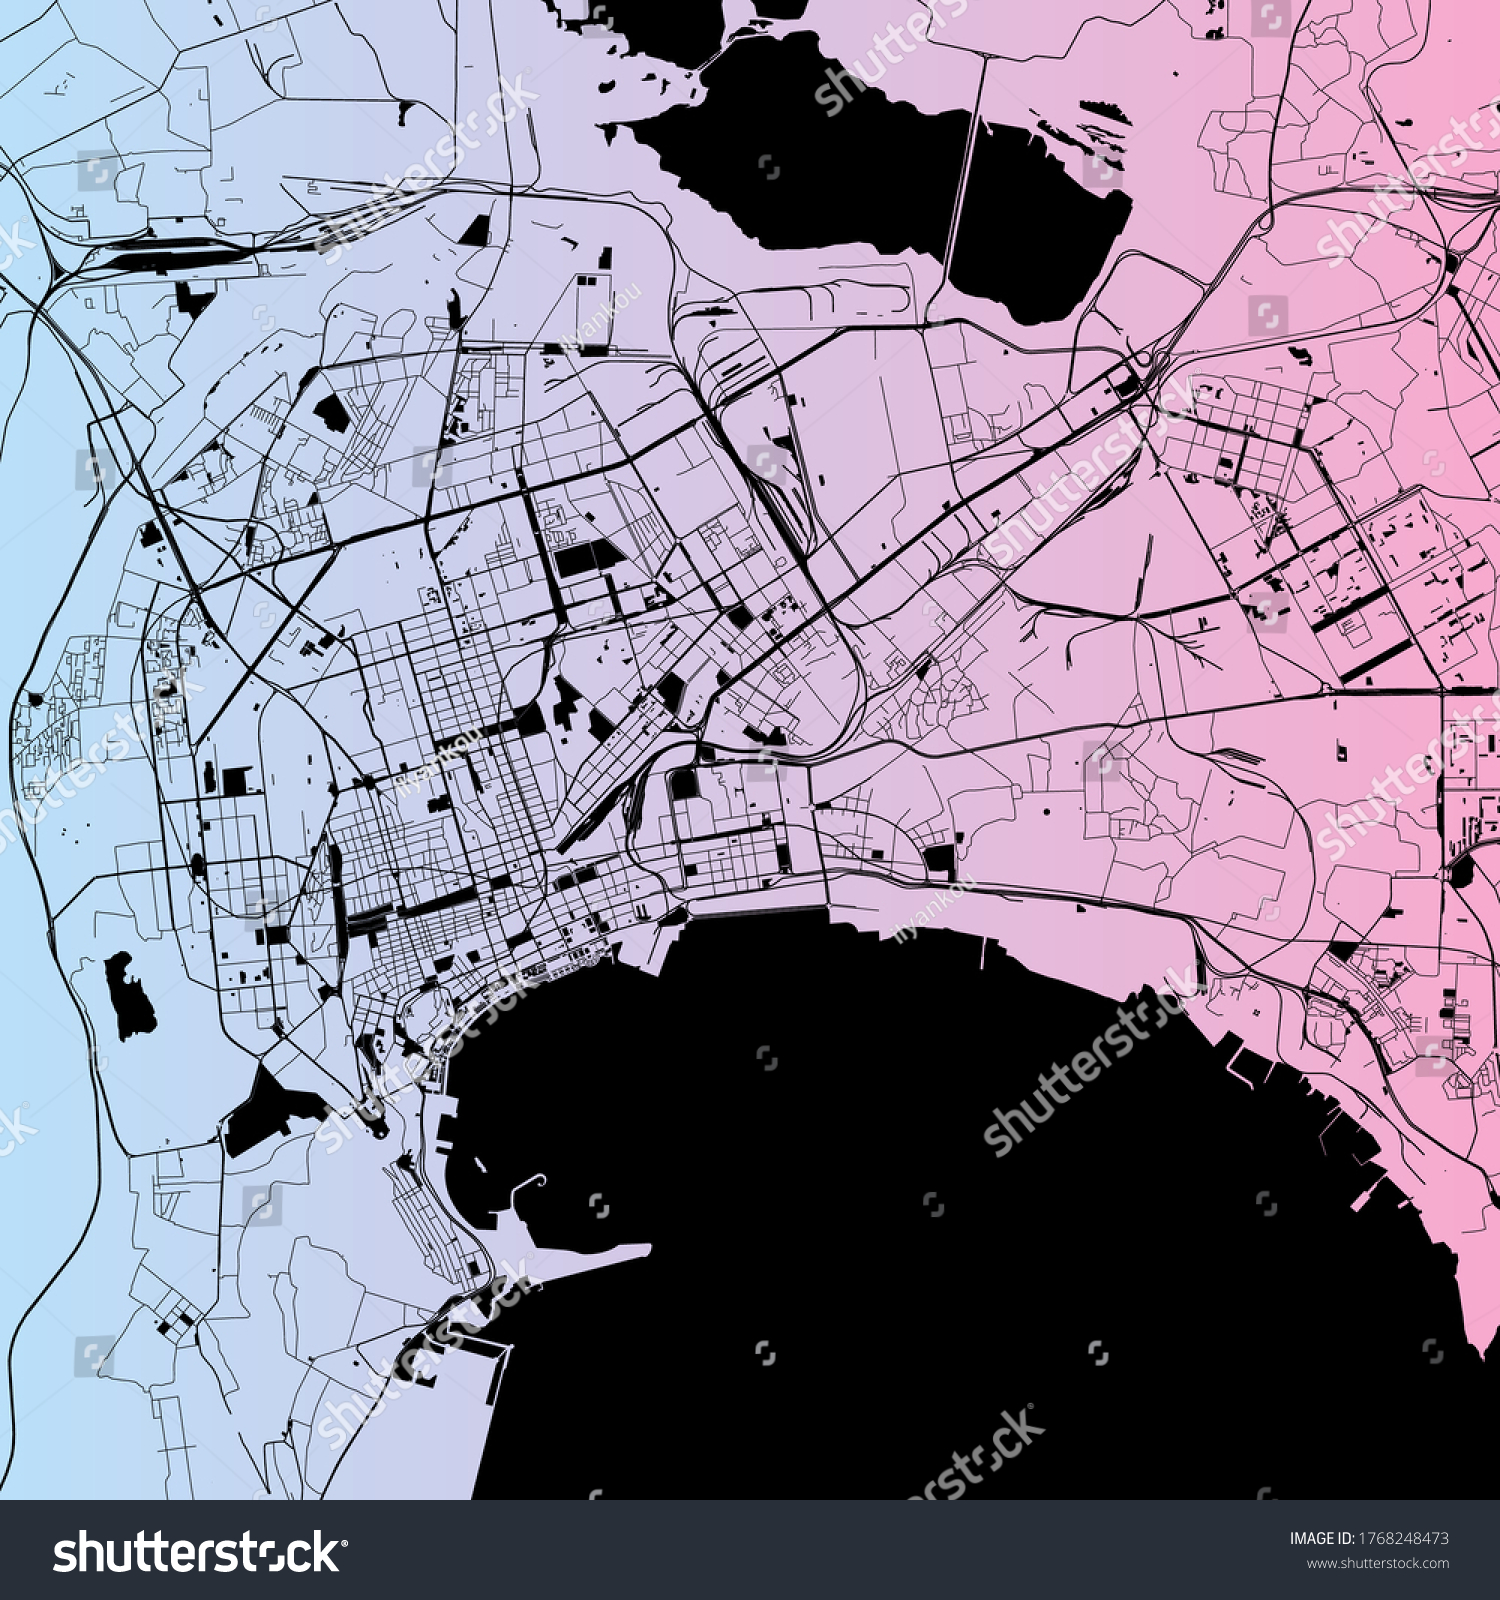 SVG of Baku, Azerbaijan — urban vector city map of capital city with parks, roads and railways, minimalist town plan design poster, Caspian sea svg